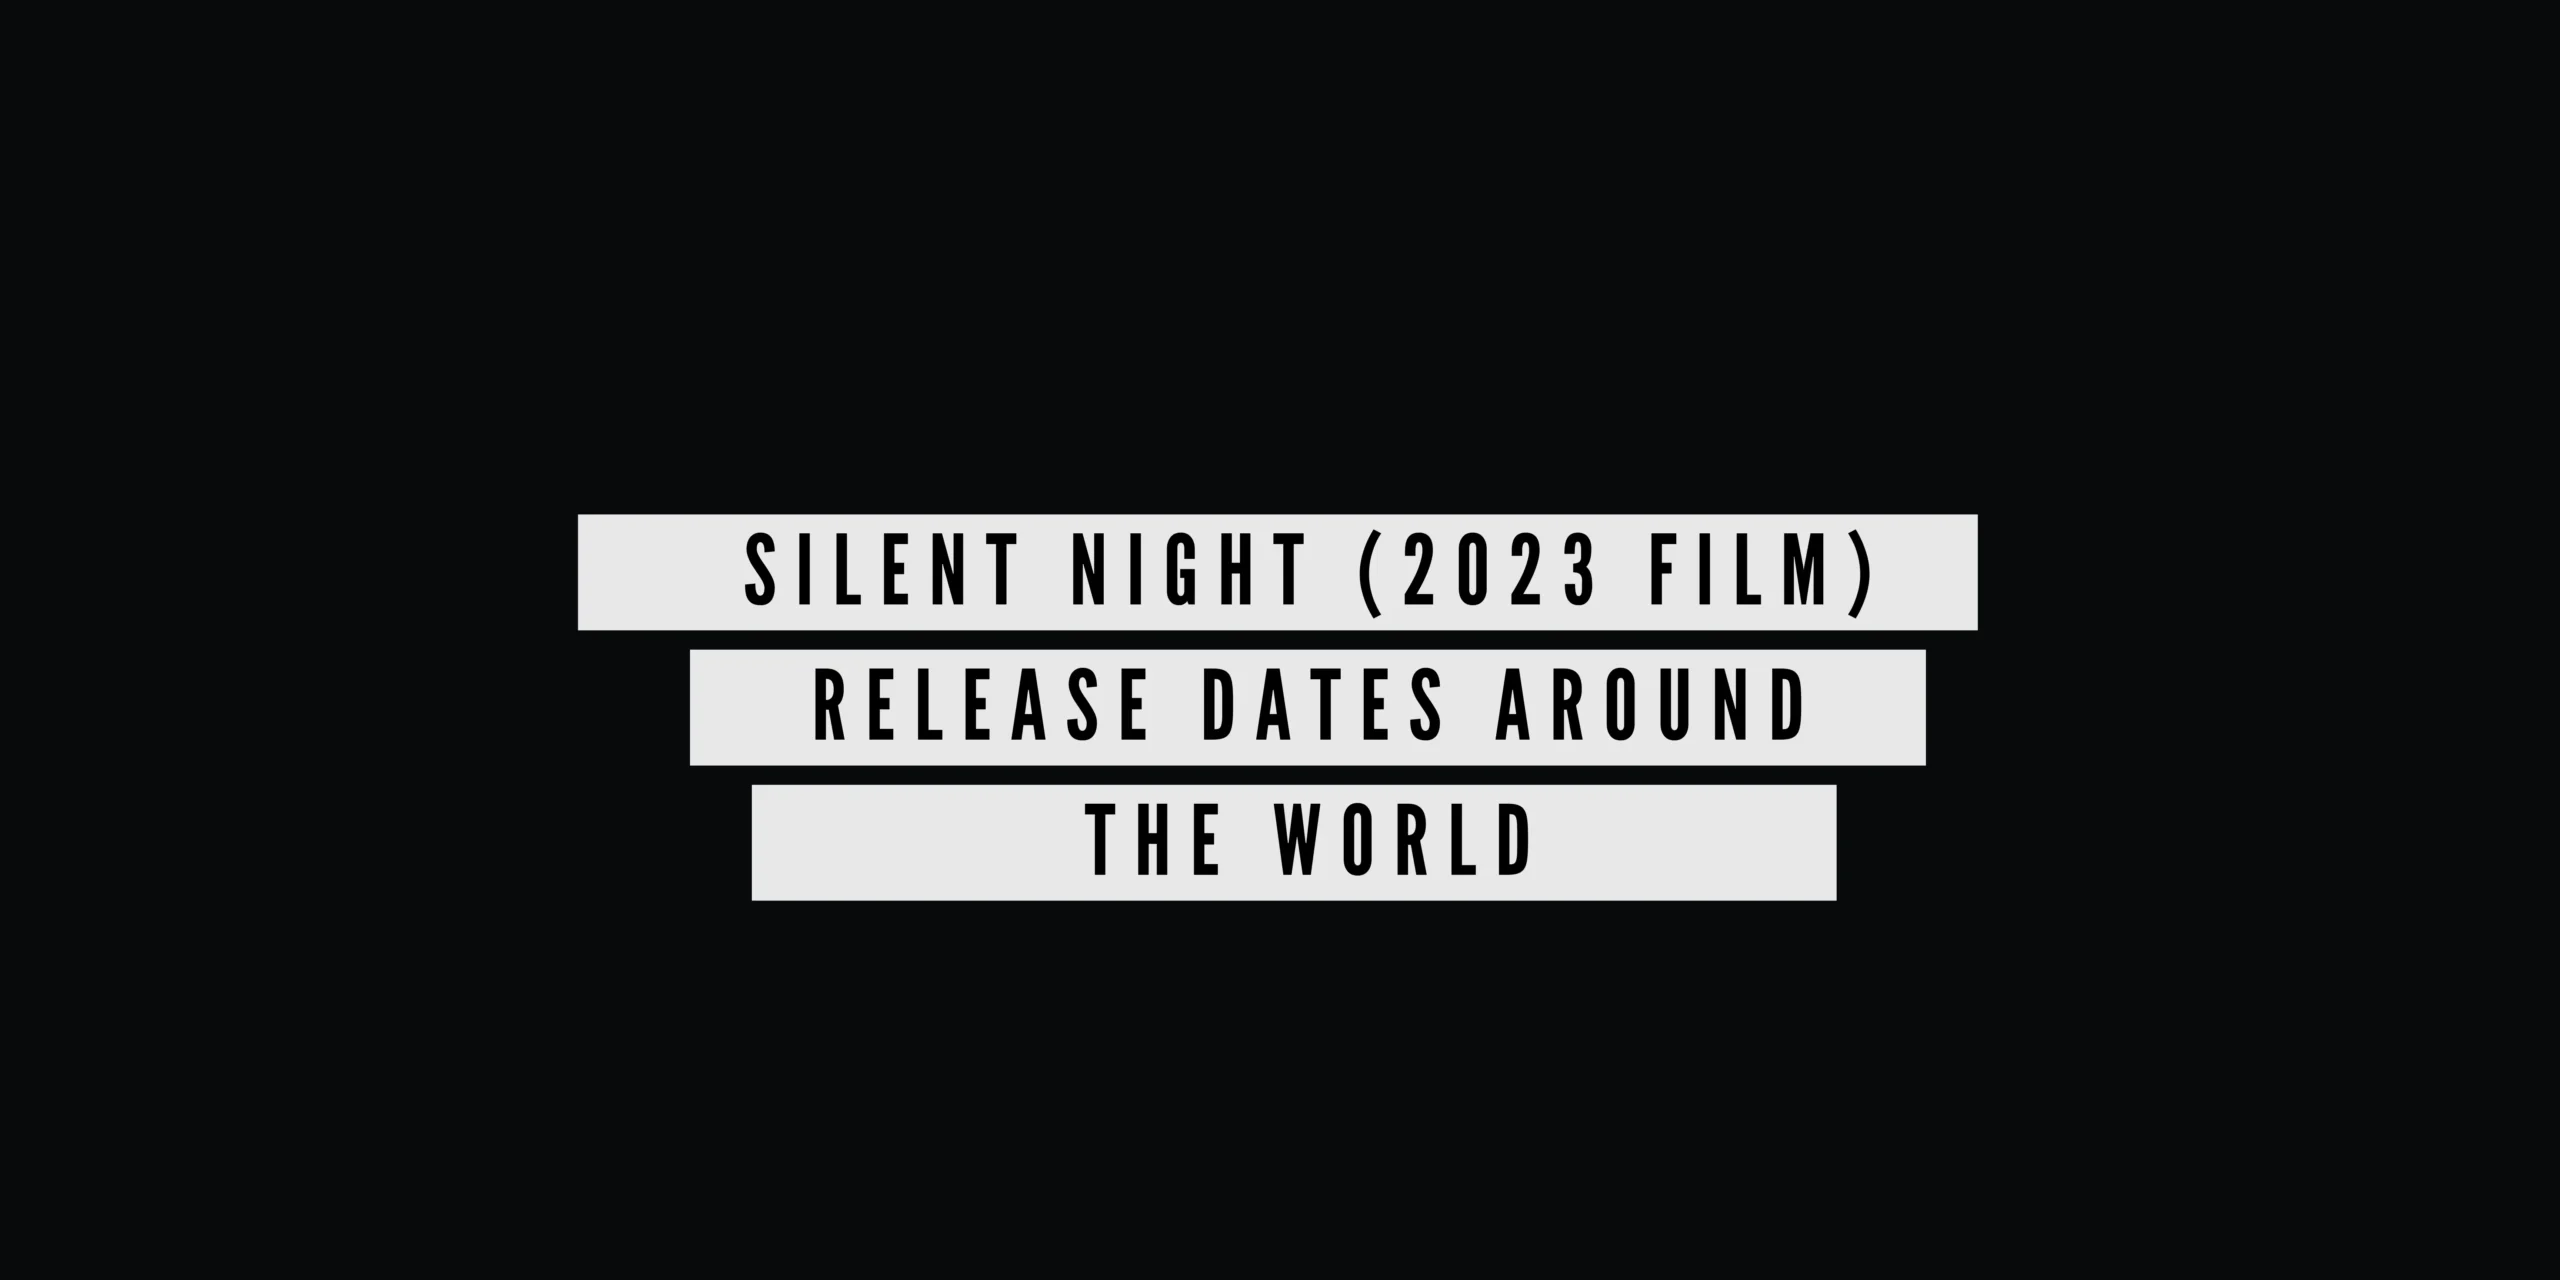 Silent Night (2023 Film) Release Dates Around the World